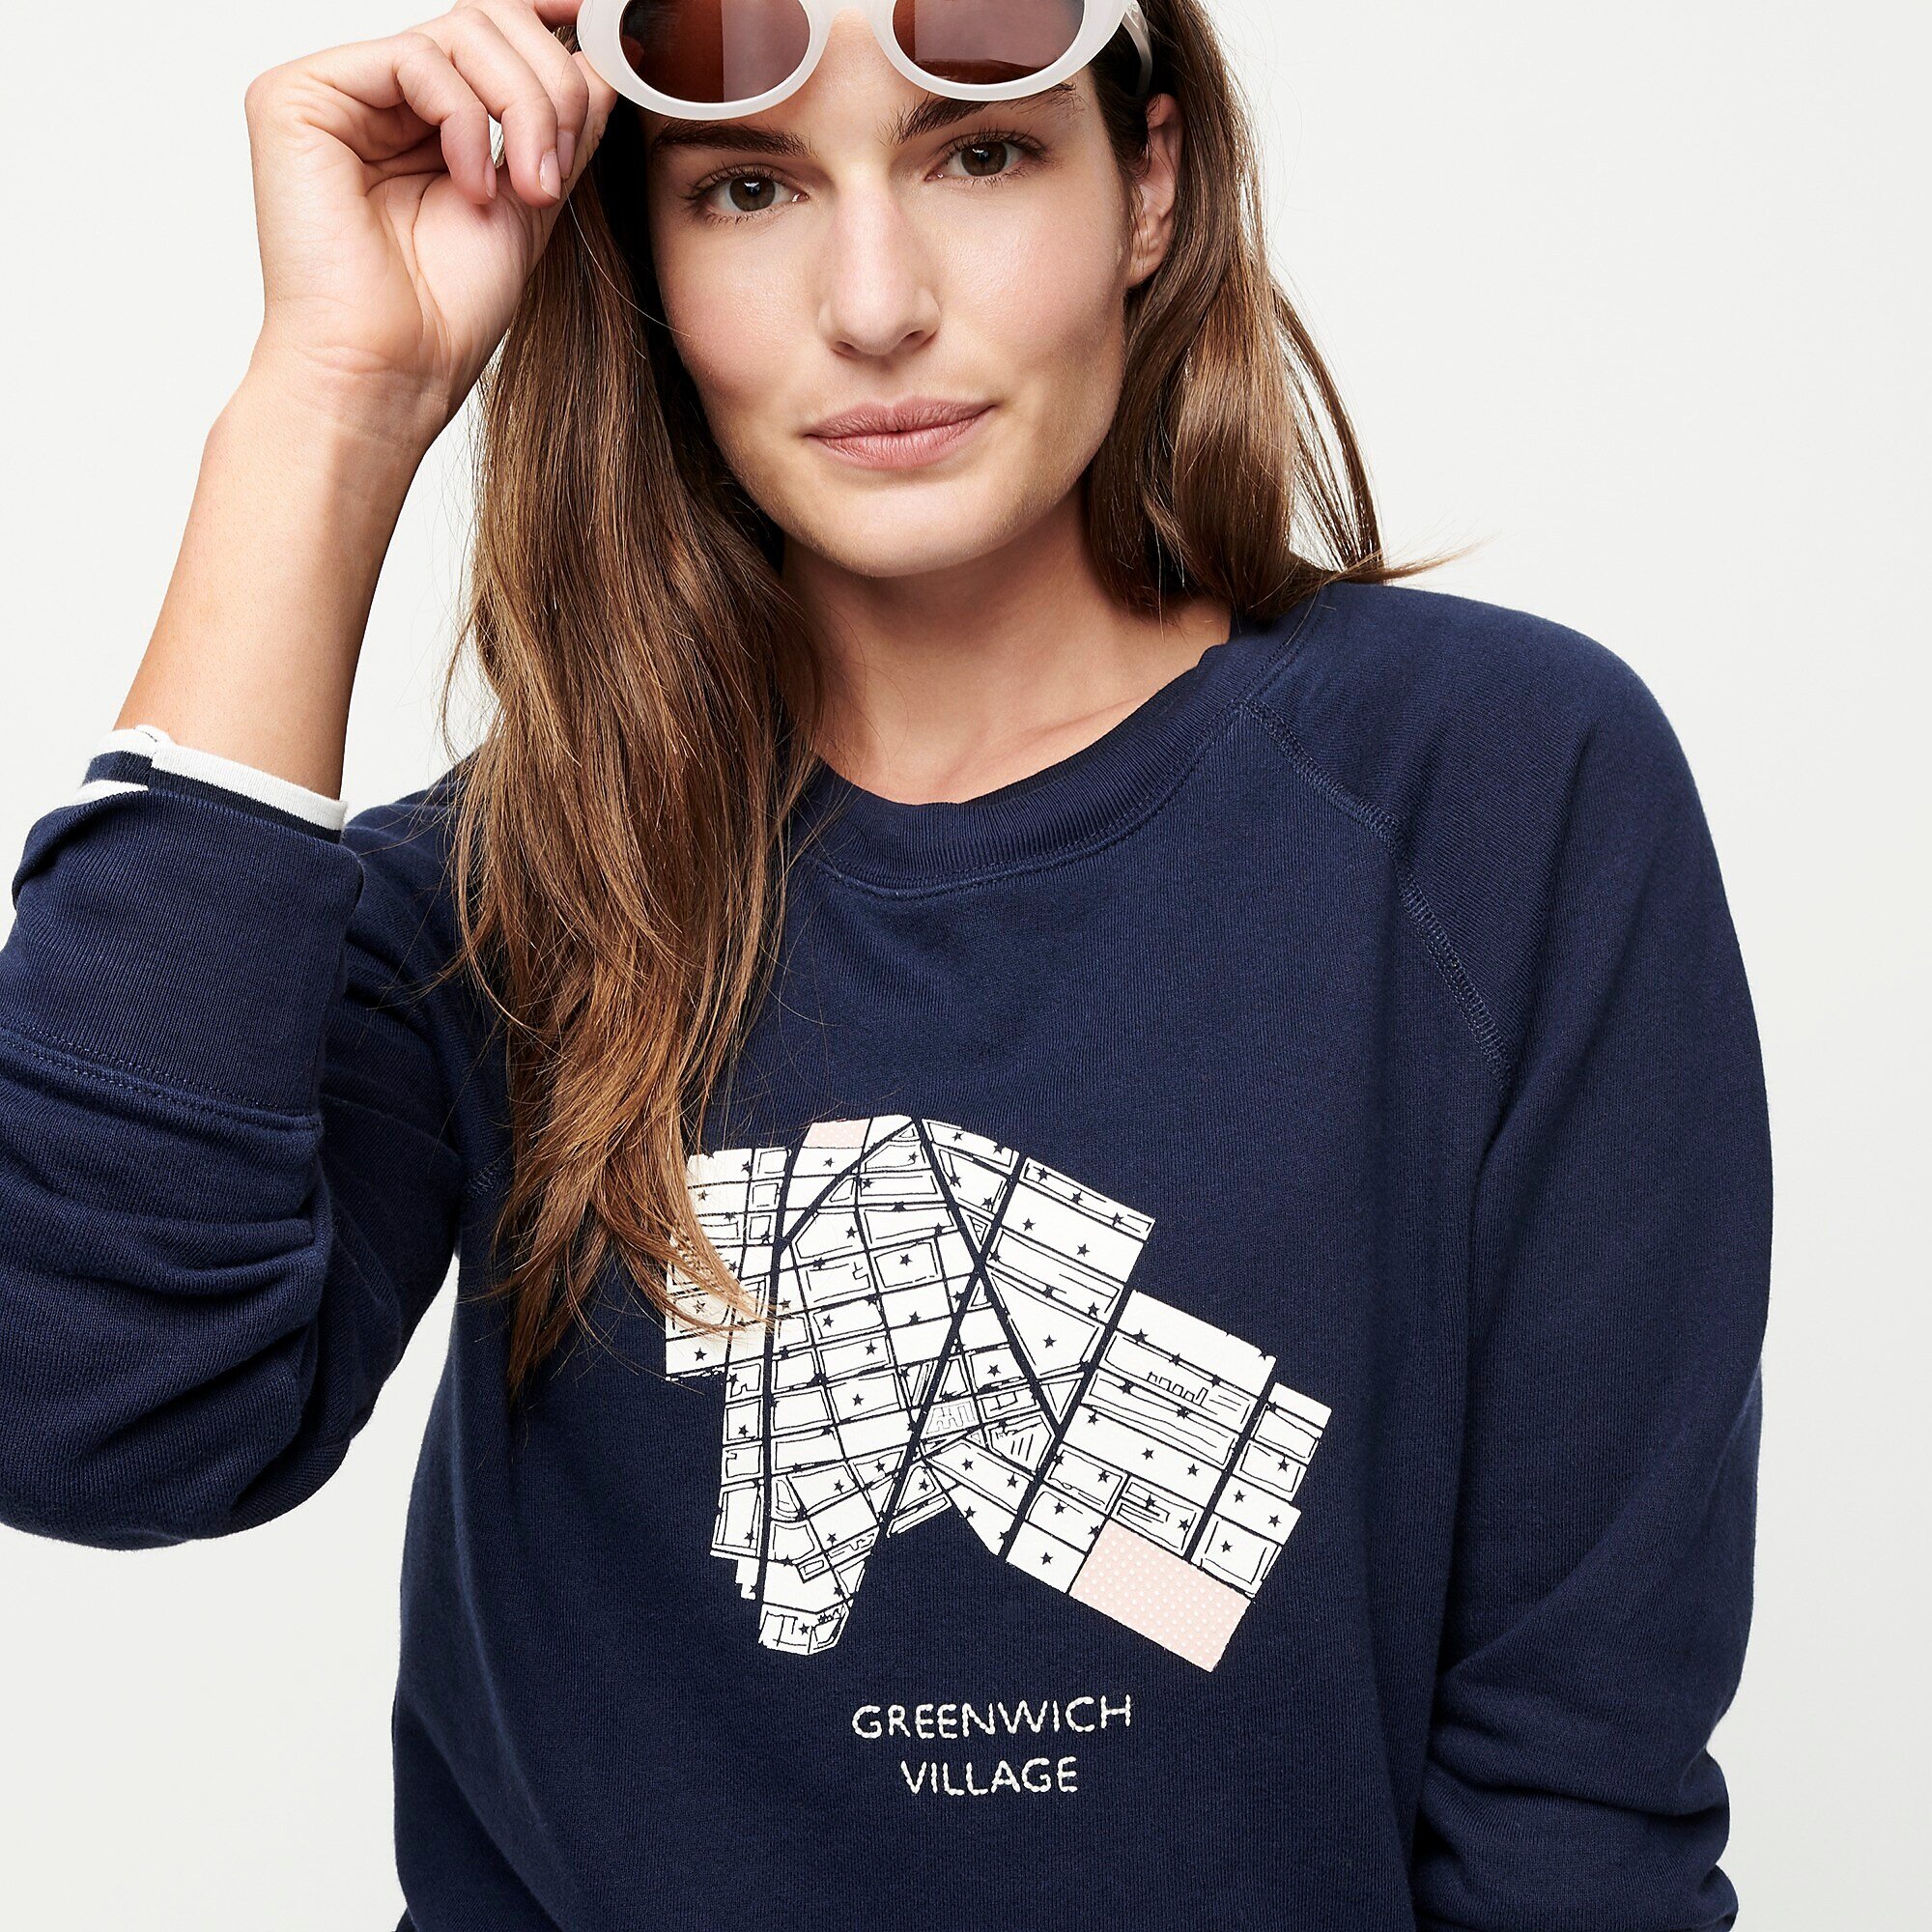 Camilla Atkins, CATKINS DESIGN for J. Crew, Fall 2019 Greenwich Village embroidered sweatshirt-1.jpeg